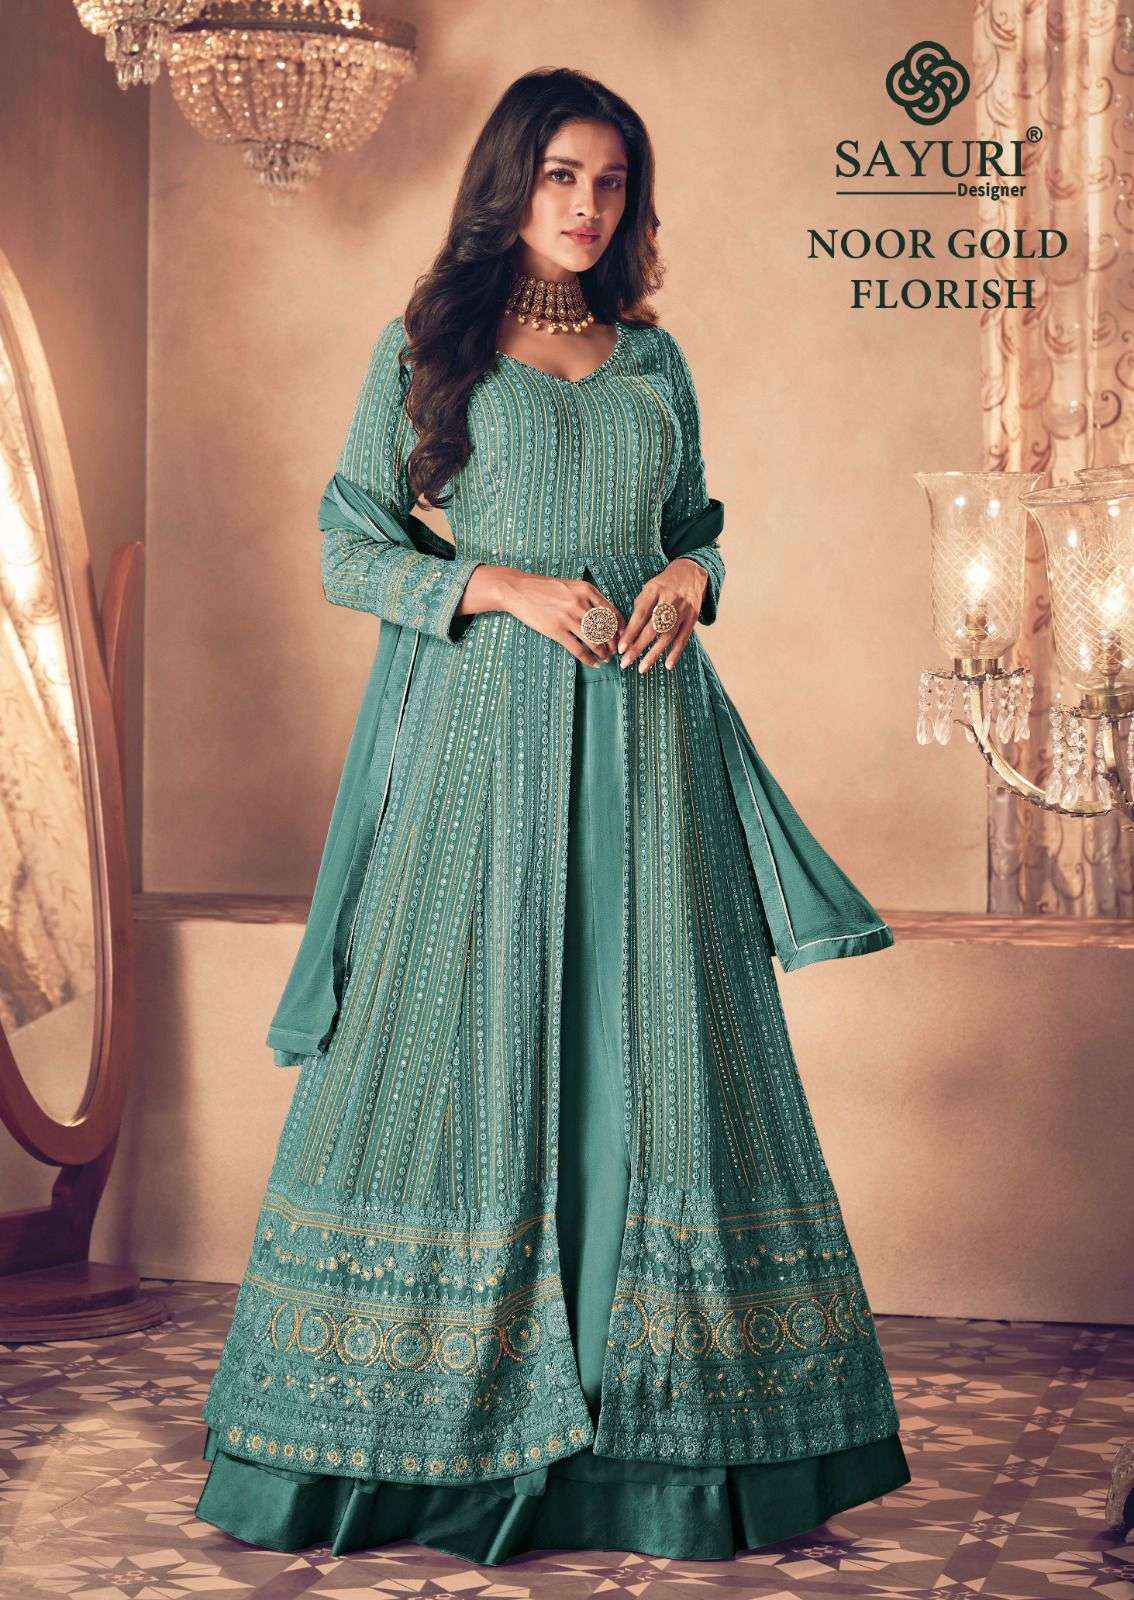 Sayuri Noor Gold Florish Indo Western Designer Dress Latest New Designs (3 pcs catalog )